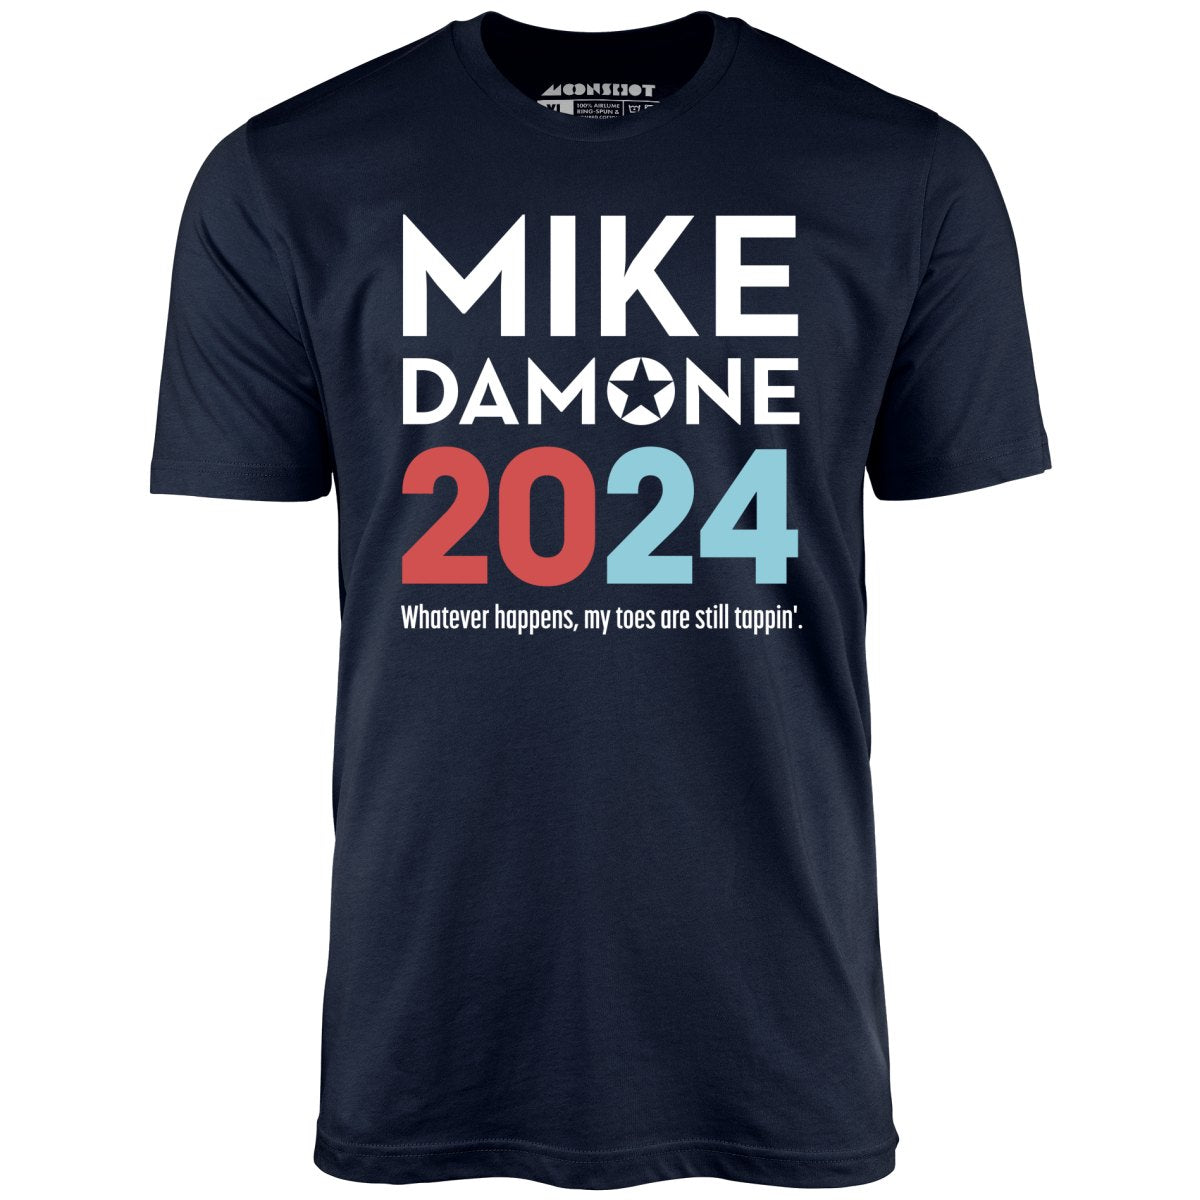 Mike Damone 2024 - Unisex T-Shirt